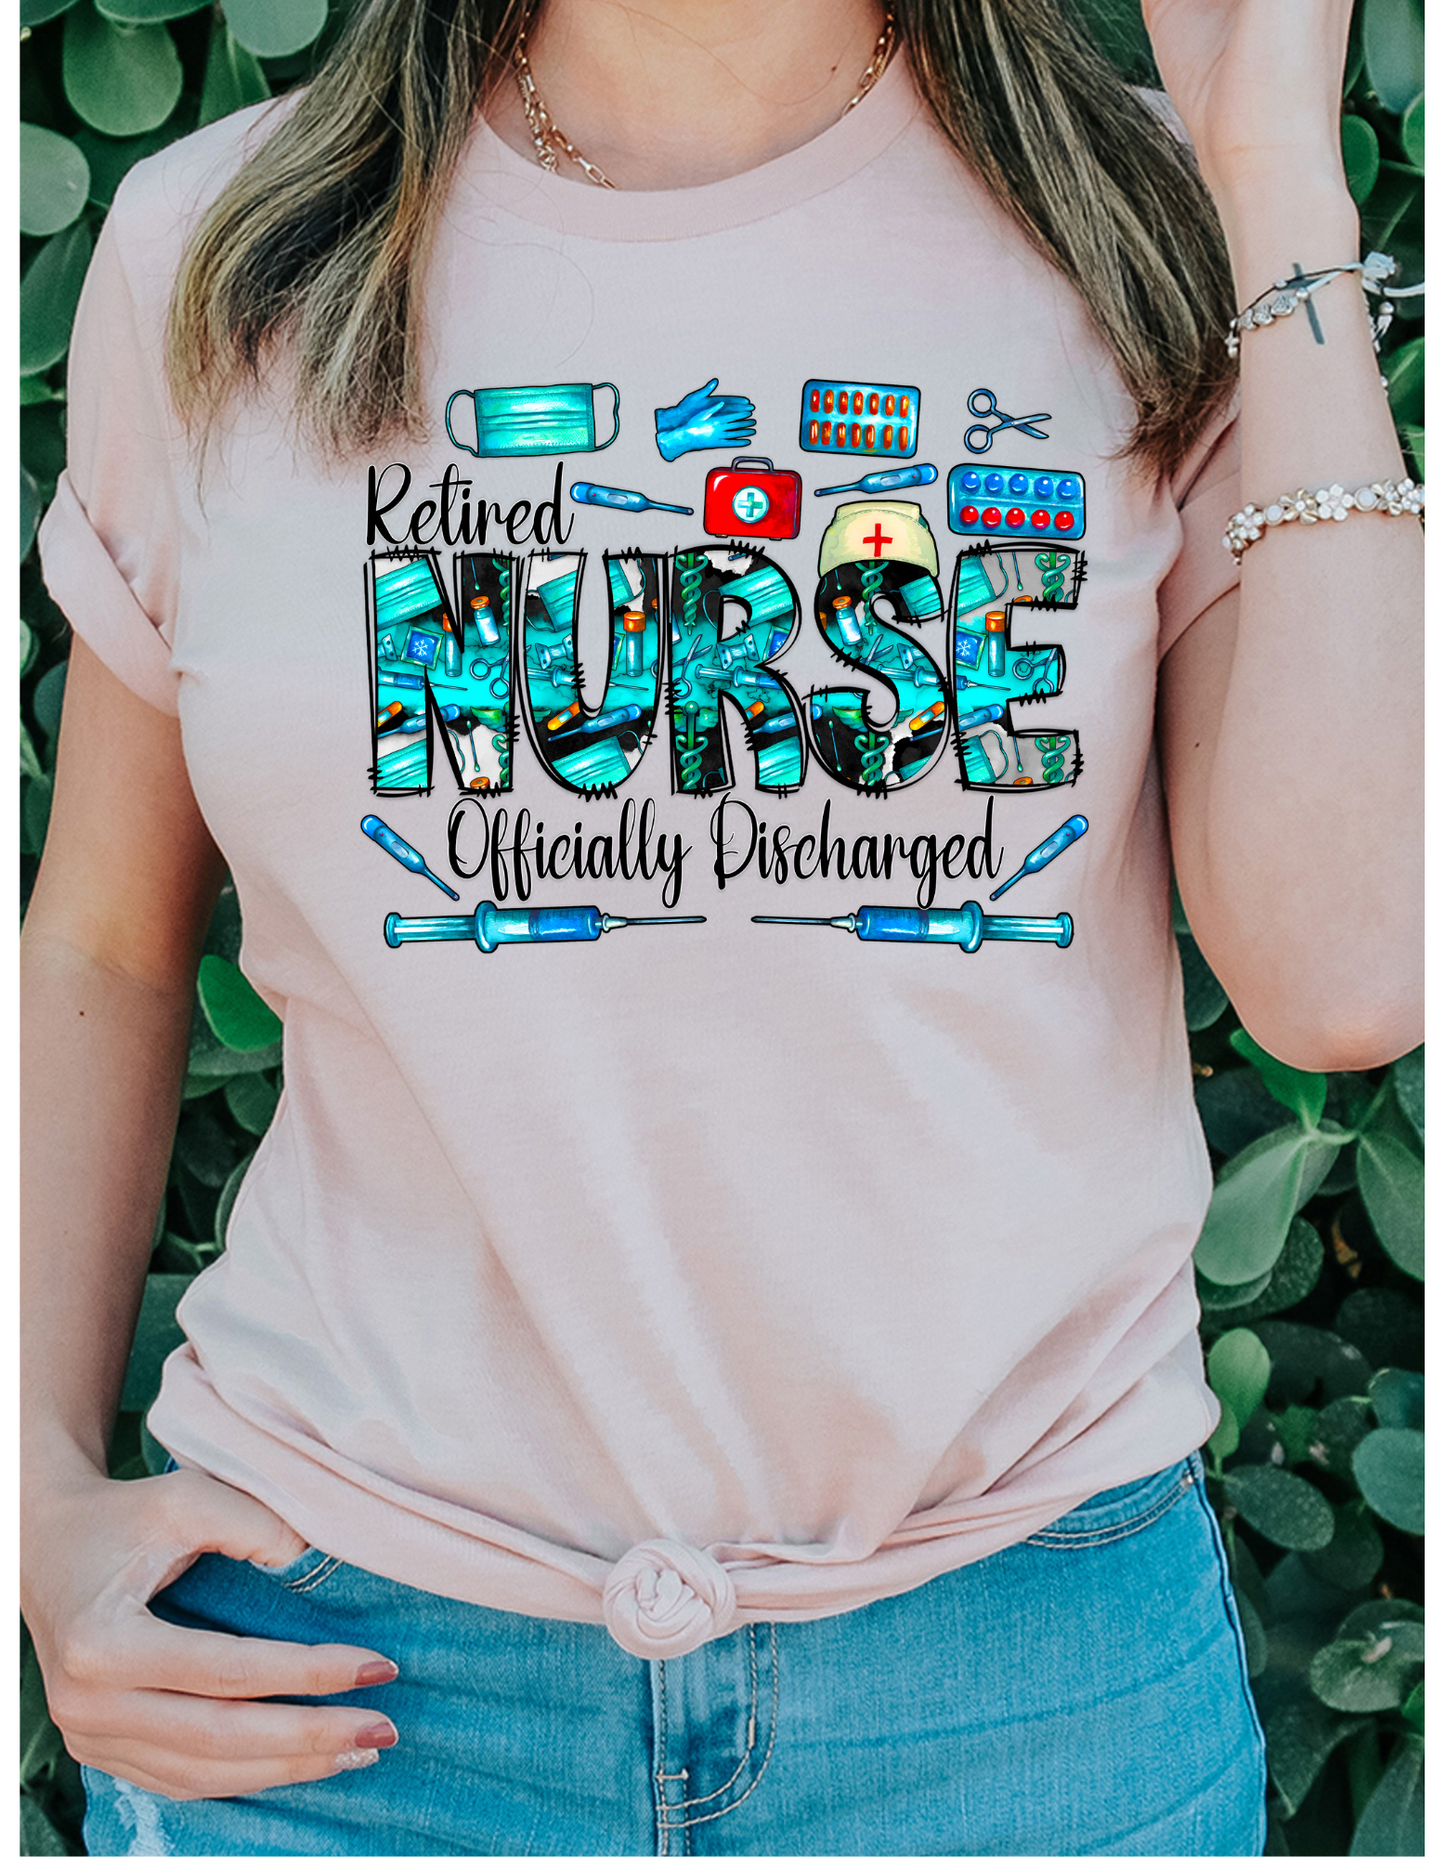 Retired Nurse T Shirt